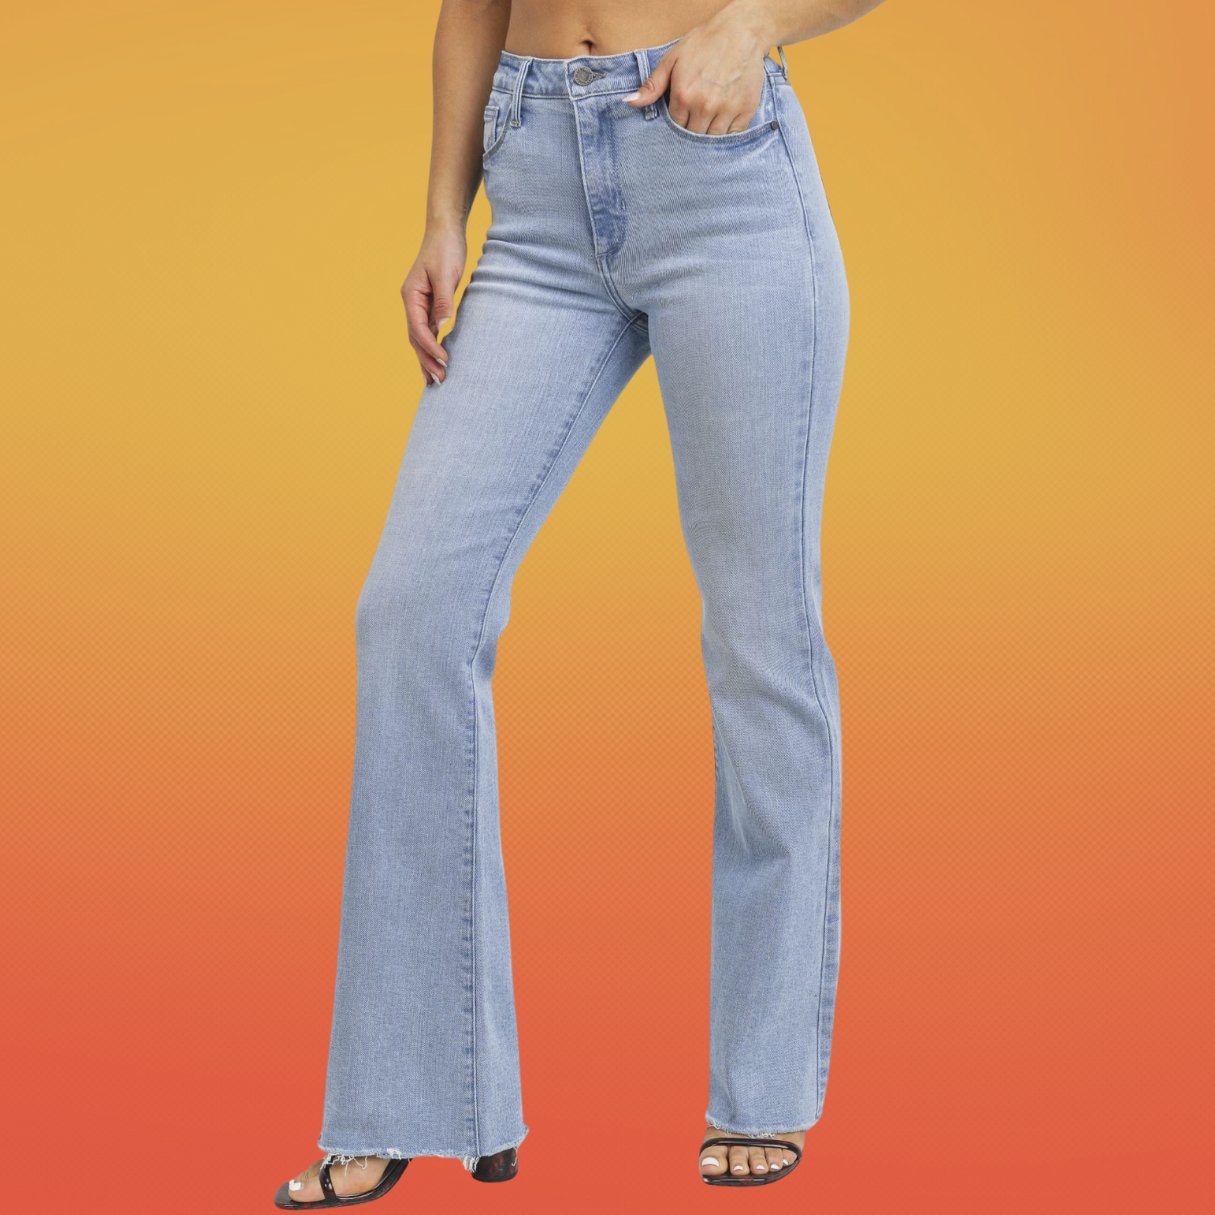 Karen Kane Ripped Skinny Jeans - Macy's